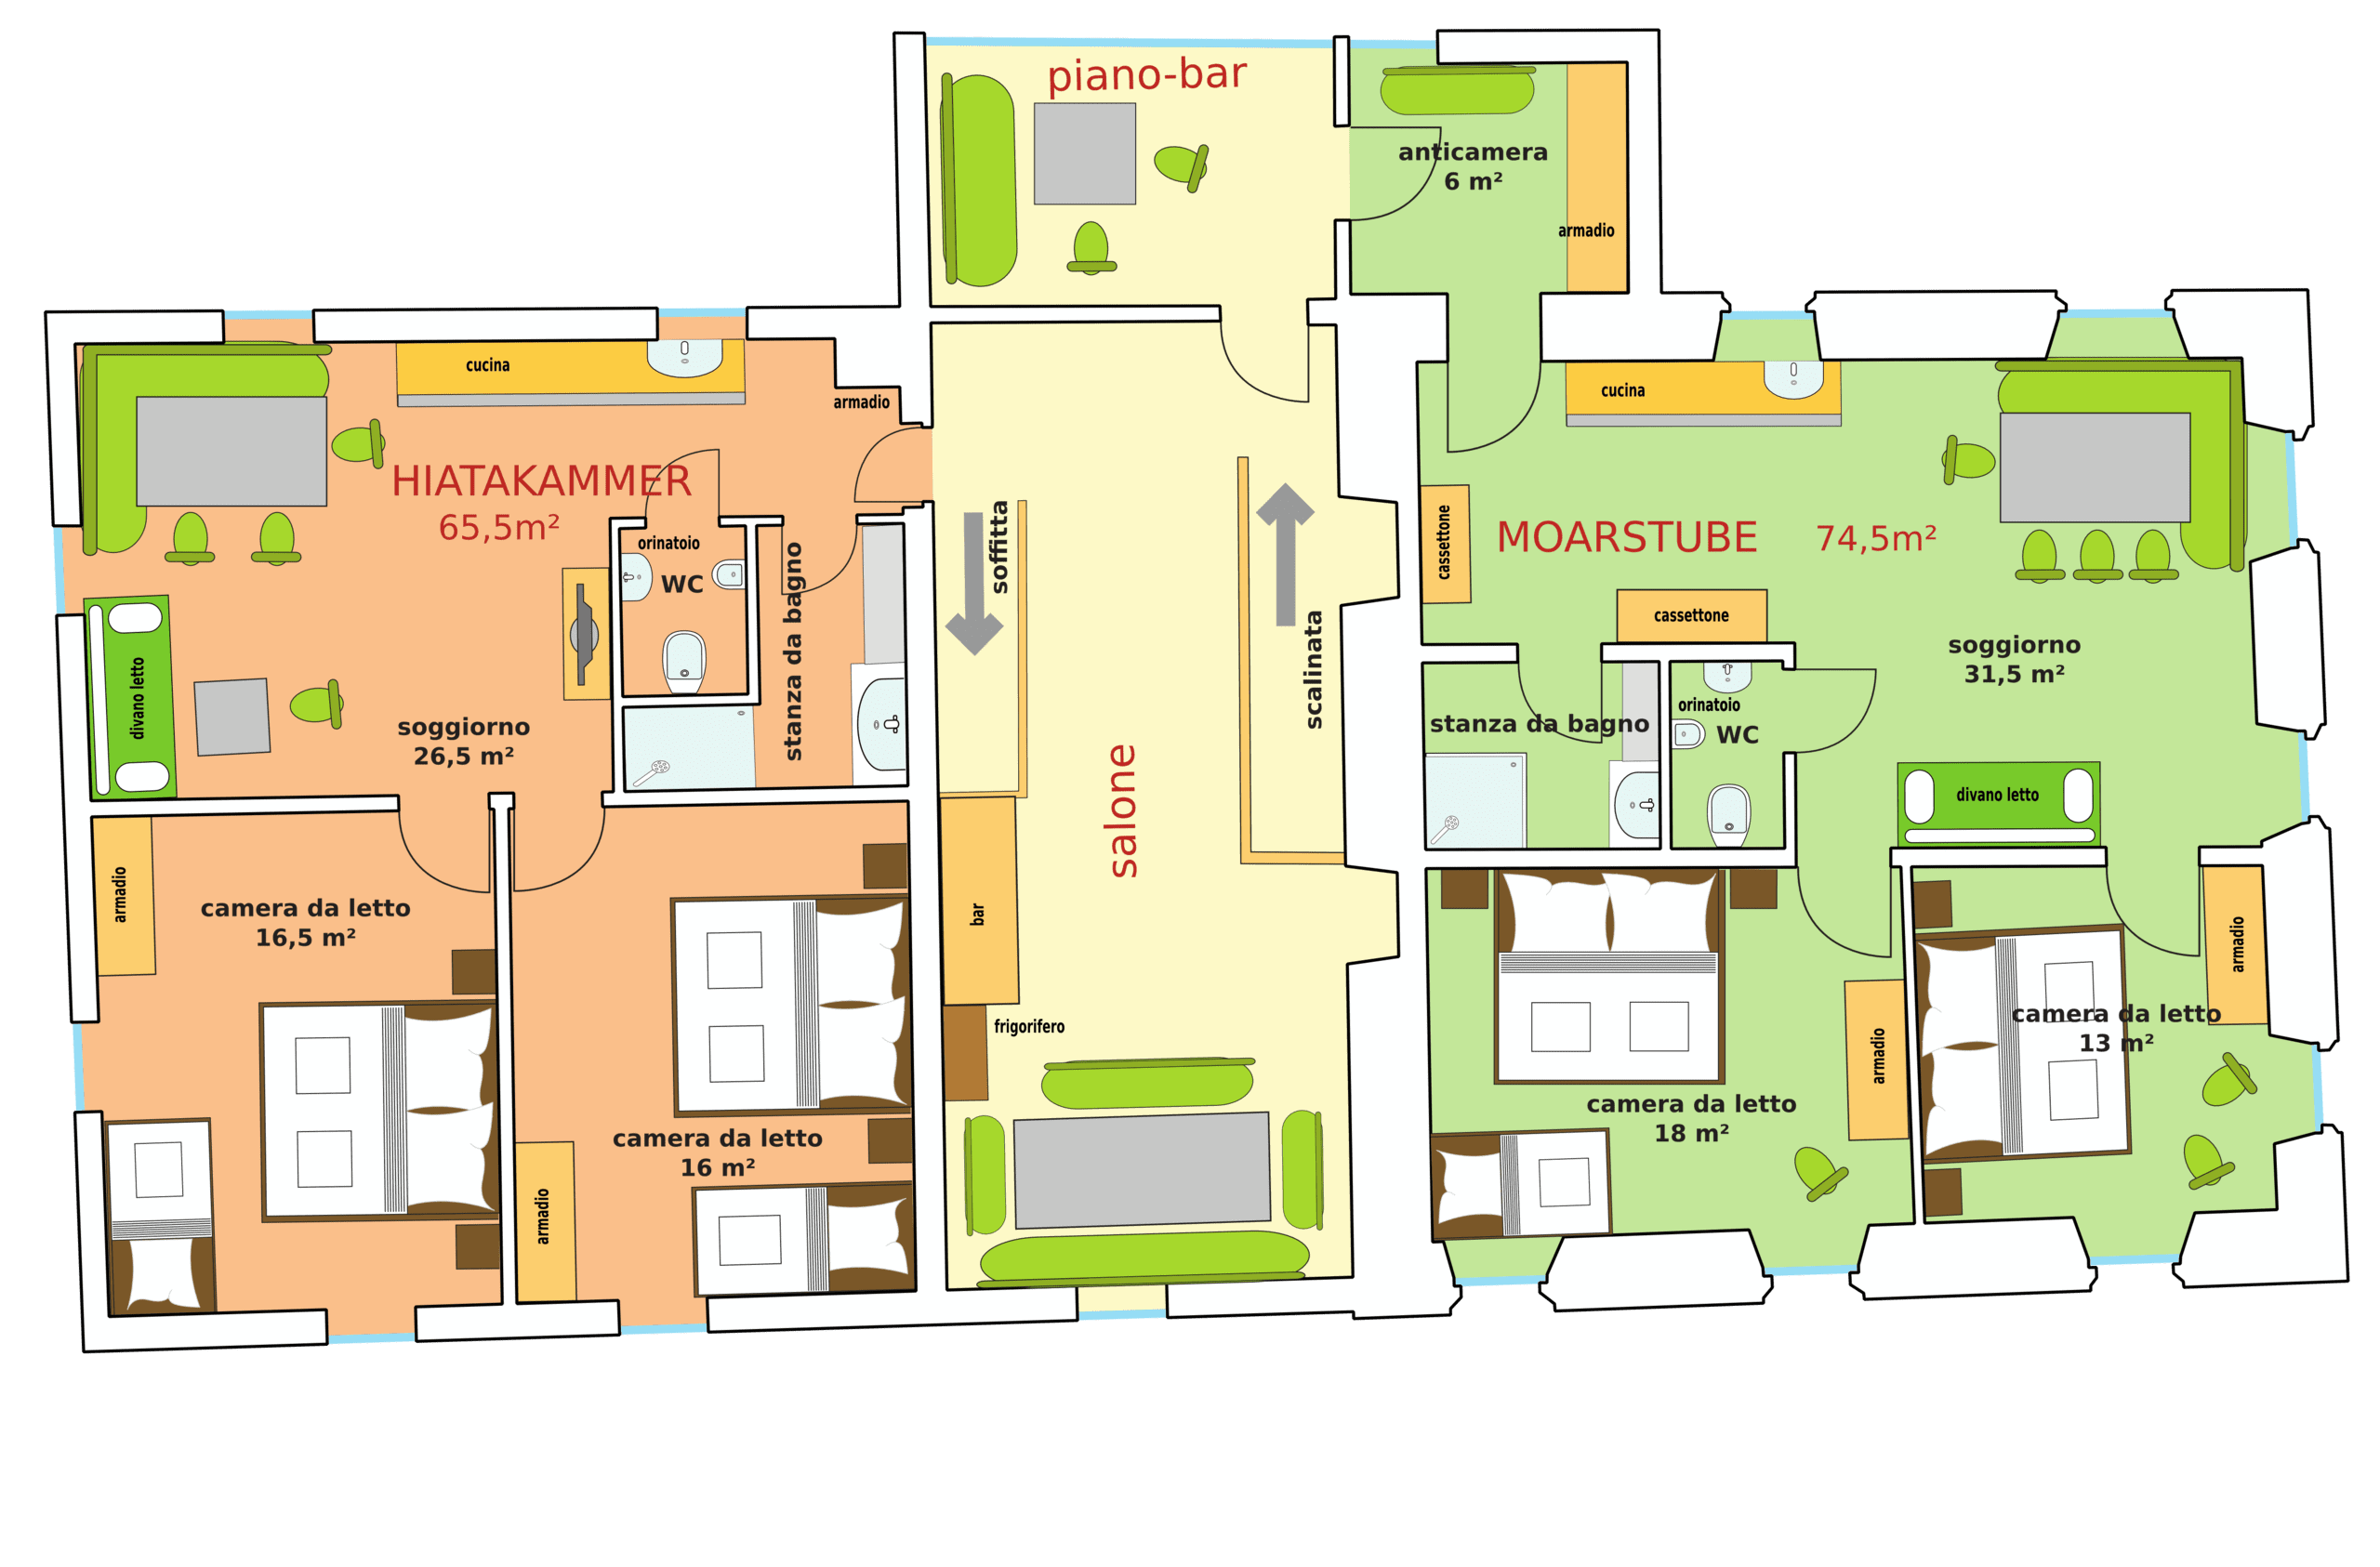 Appartements im moarhaus